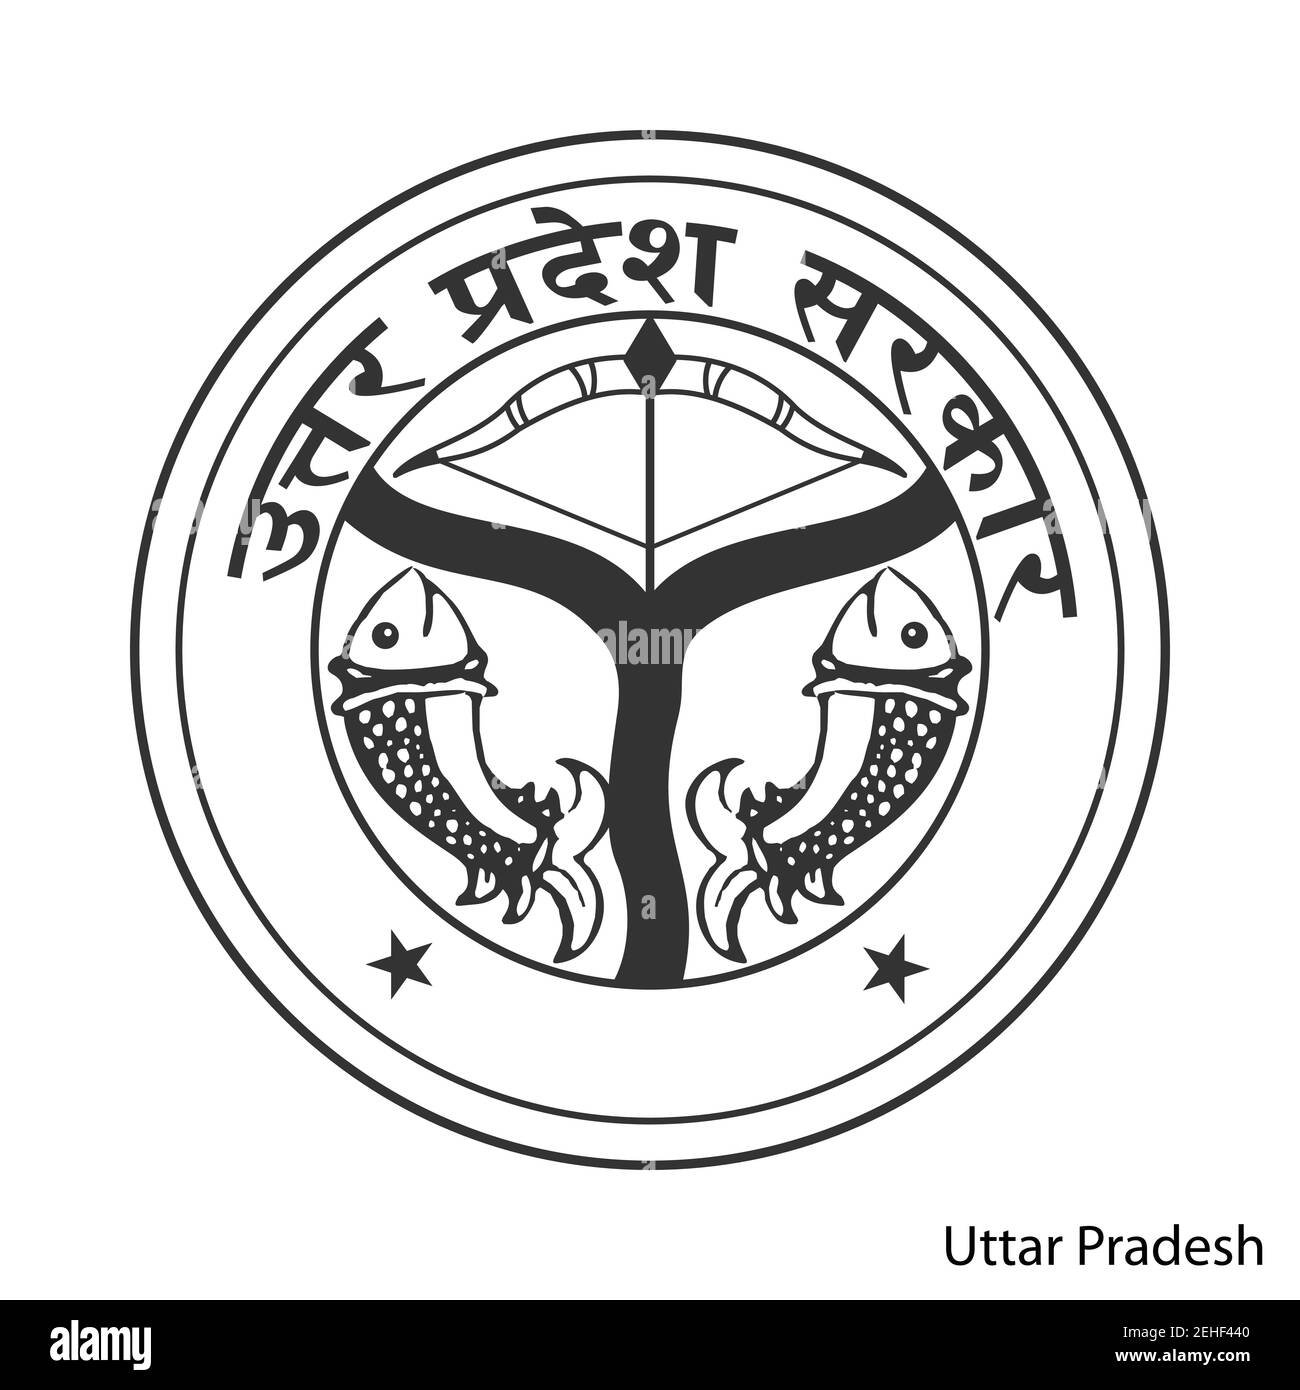 File:Seal of Uttar Pradesh.png - Wikimedia Commons